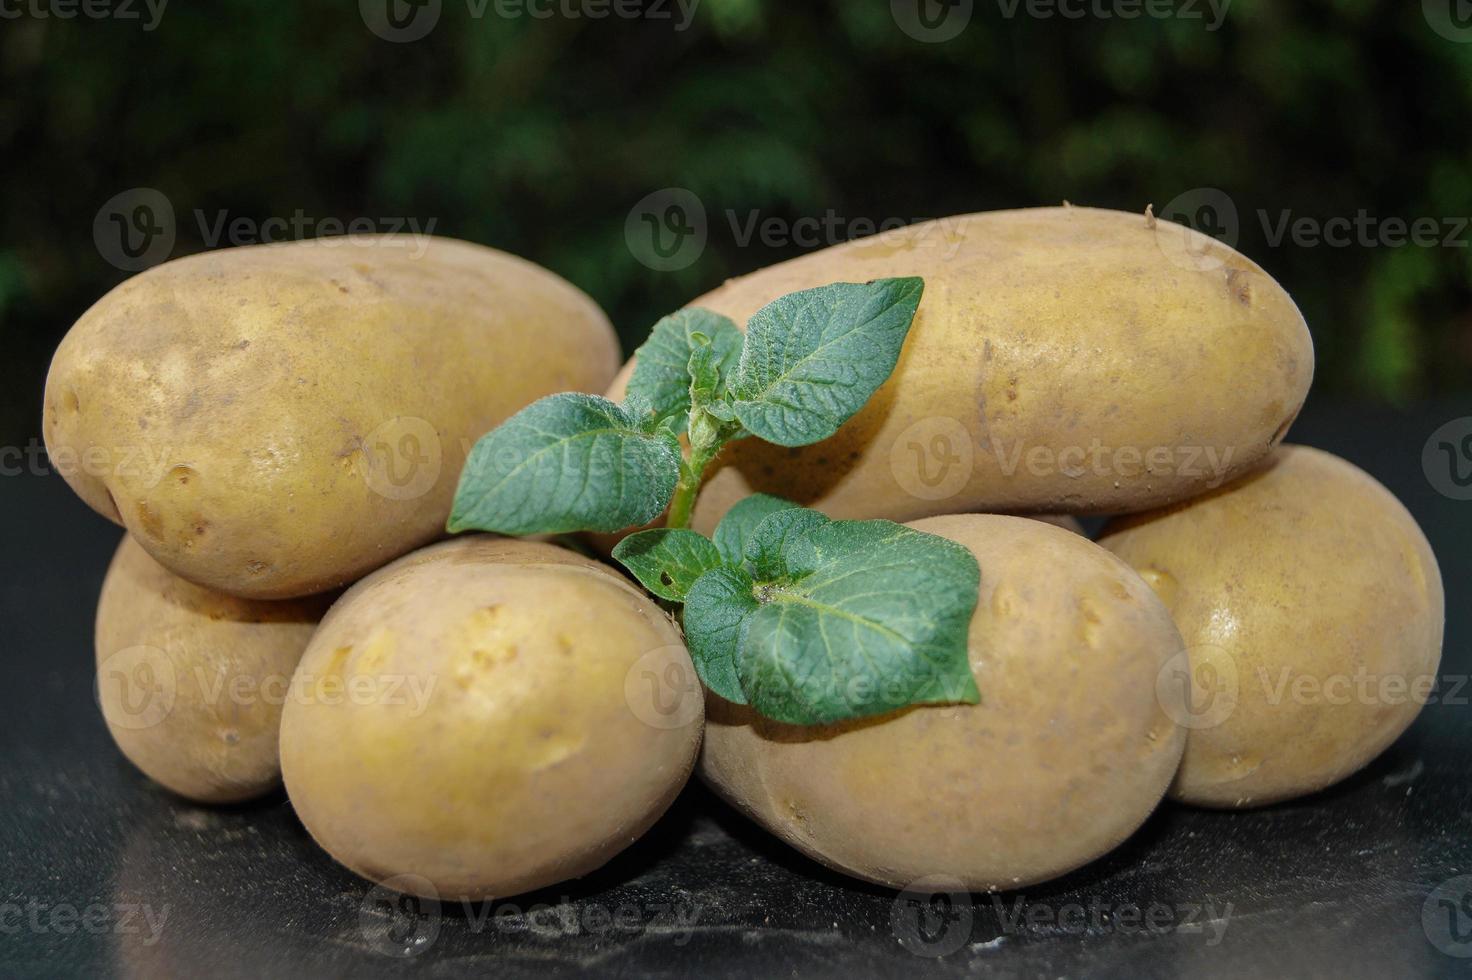 Duitse aardappelen direct na de oogst foto